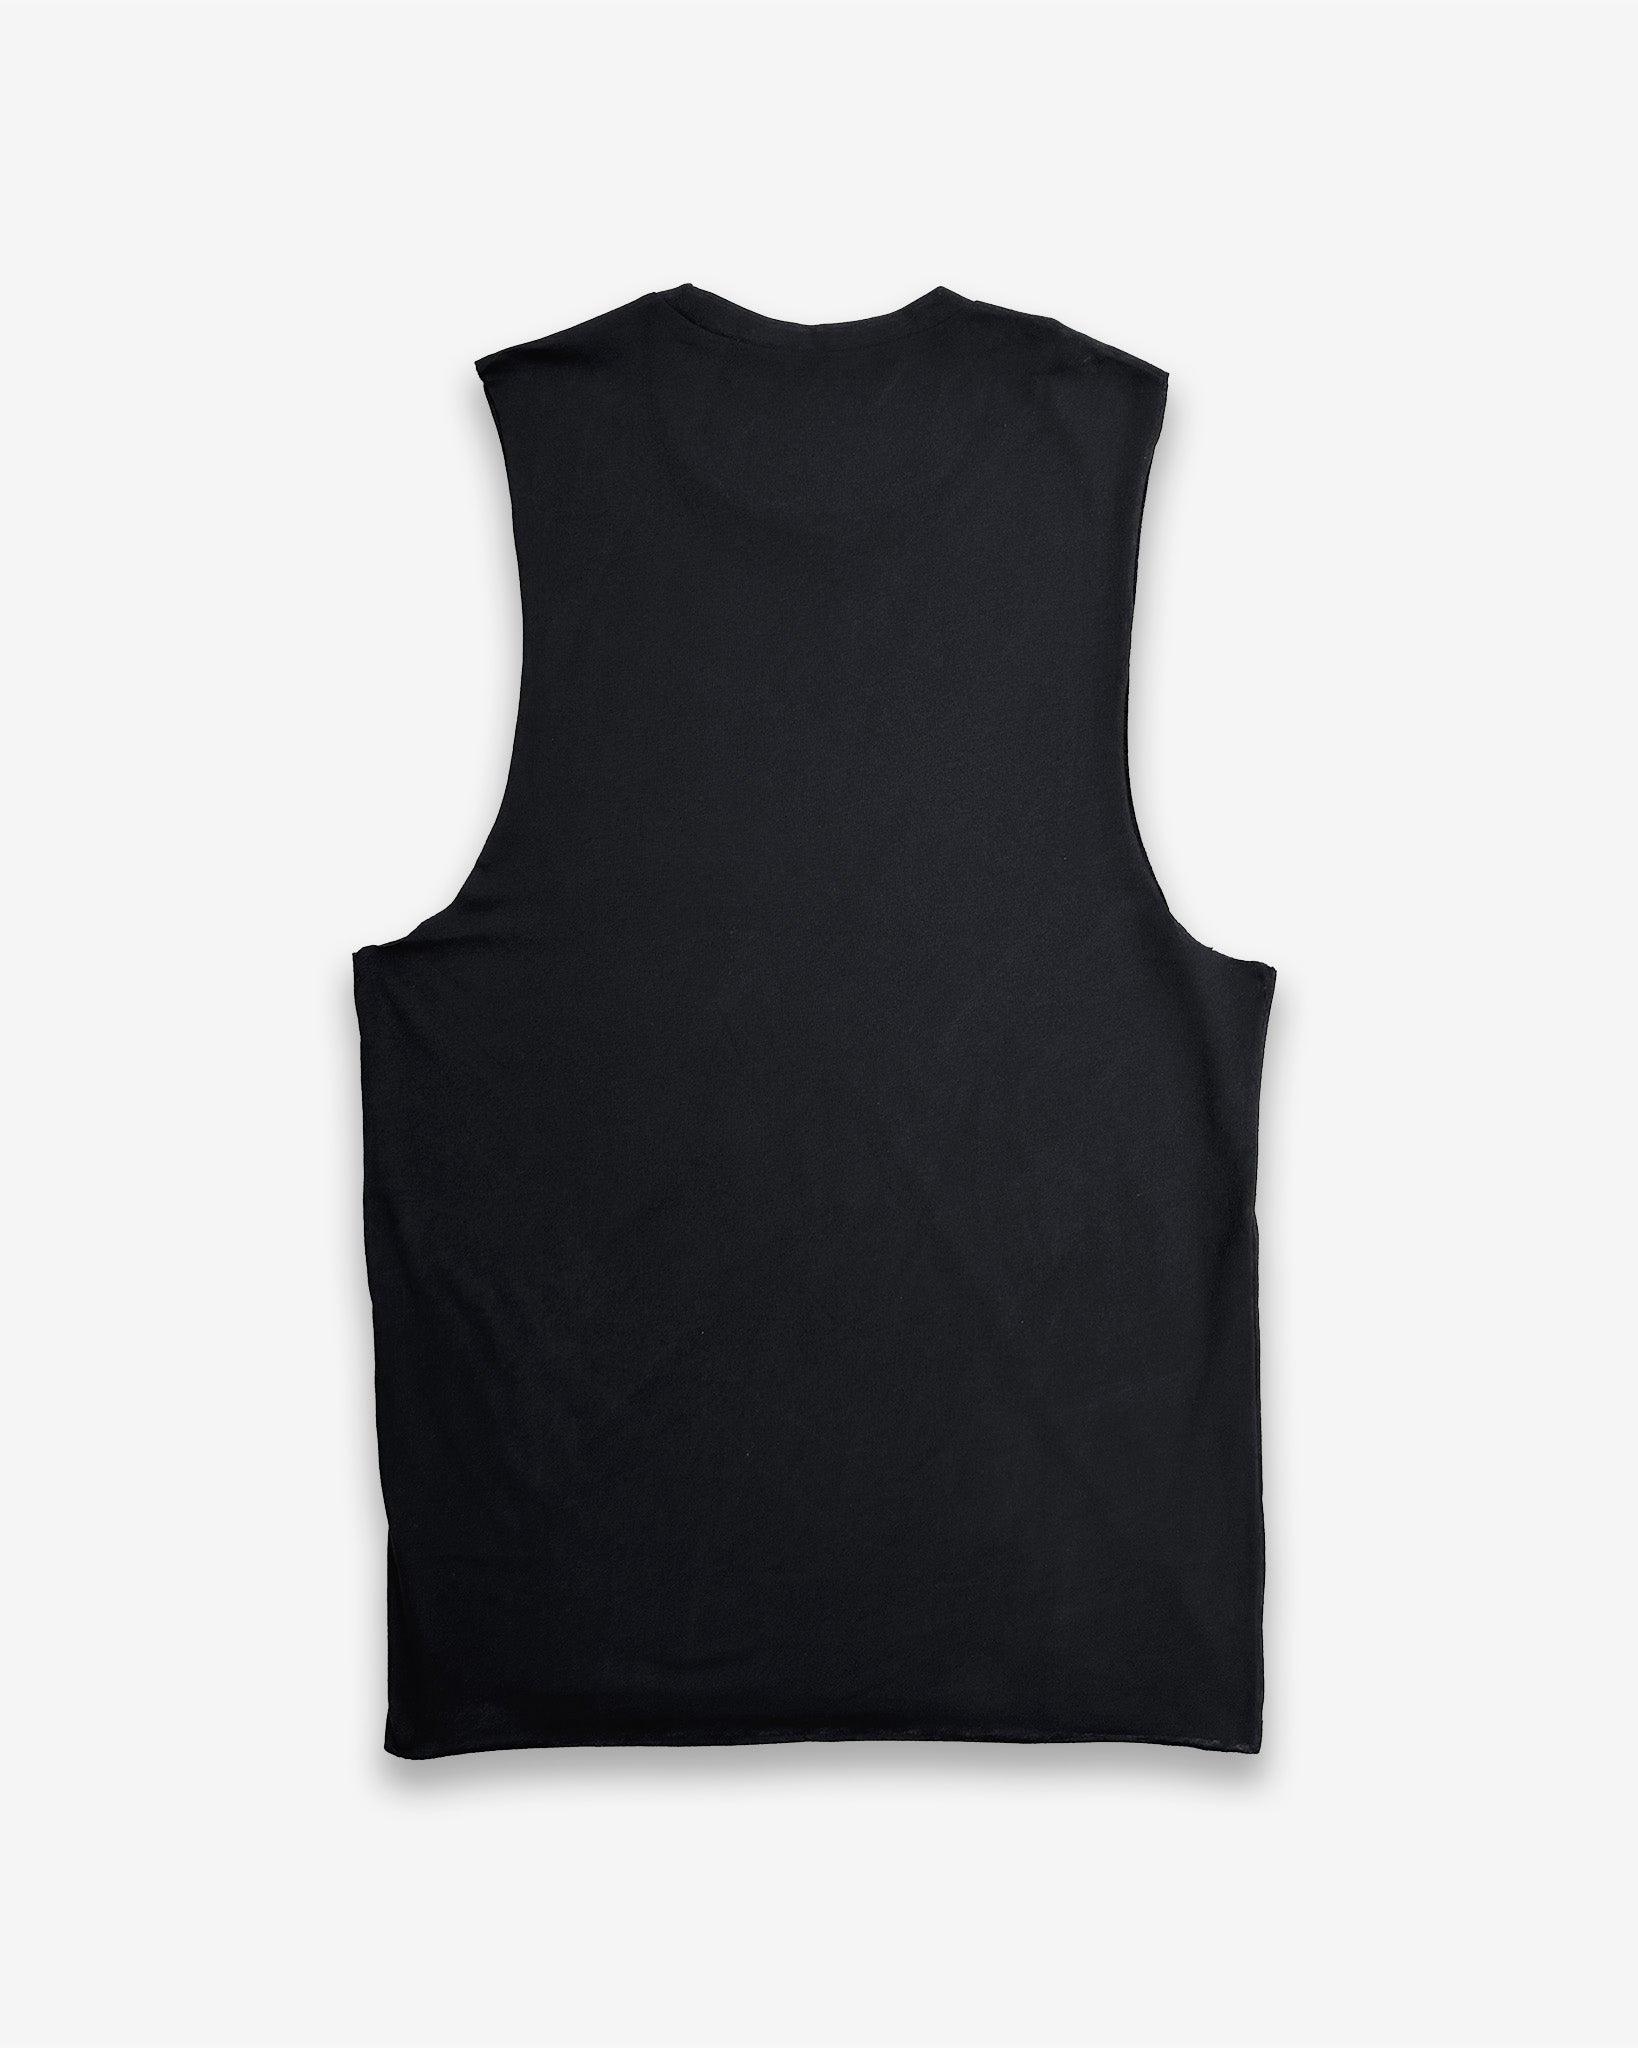 Plain black vest